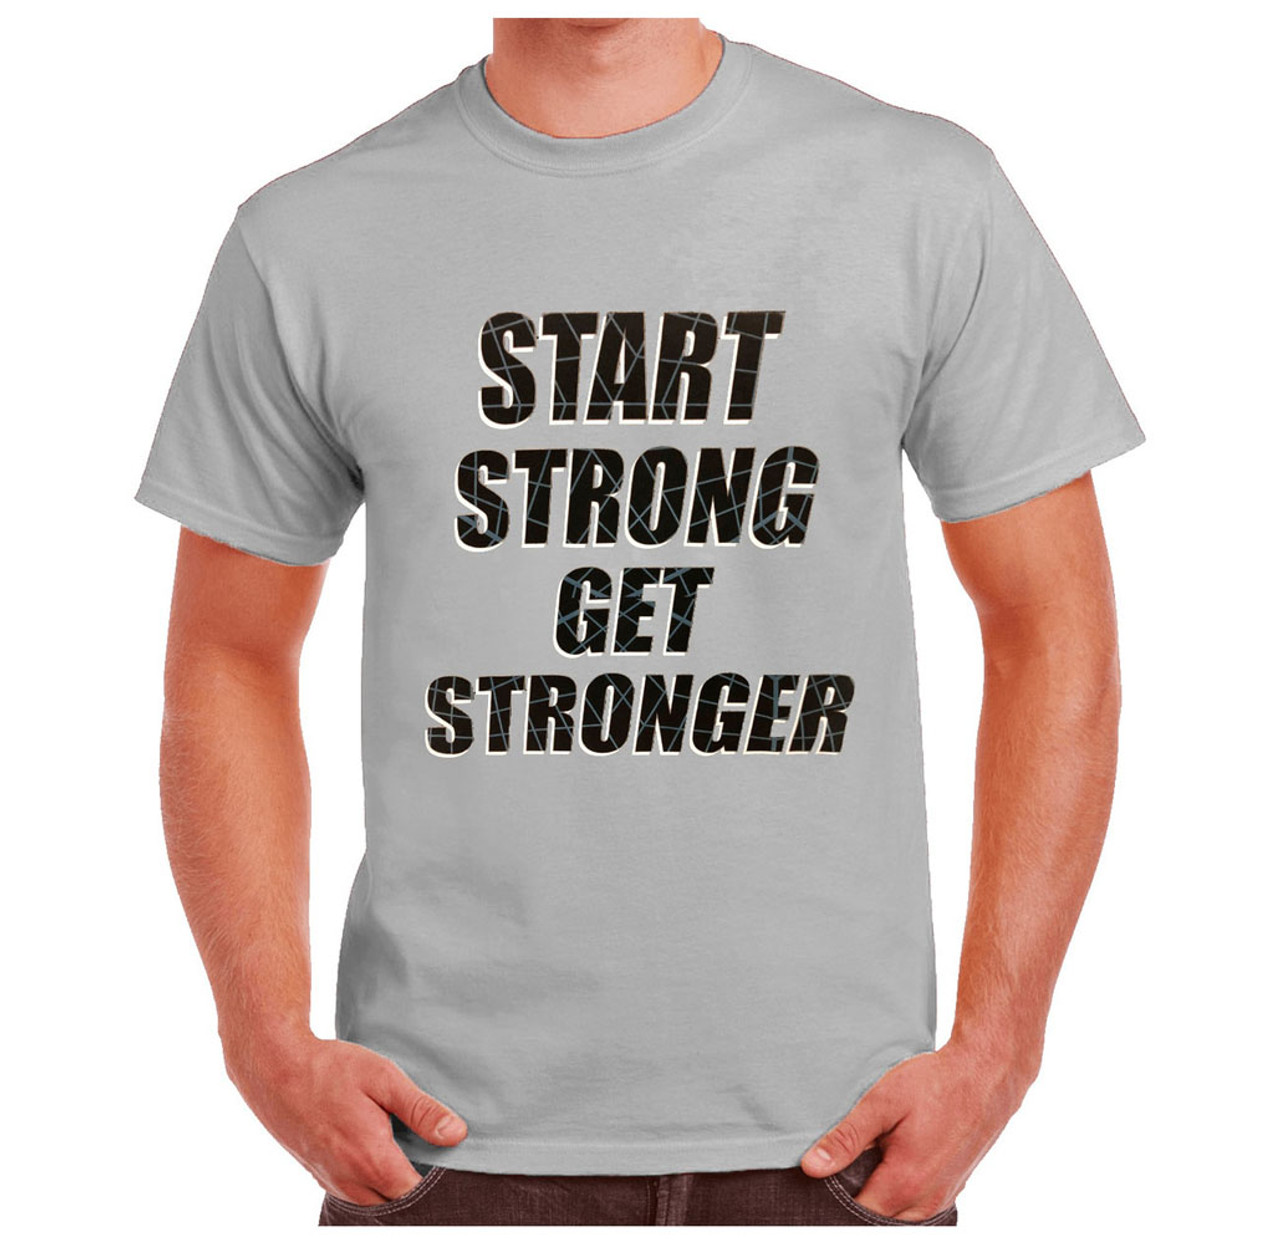 New Balance Men’s Start Strong Get Stronger T-Shirt product image